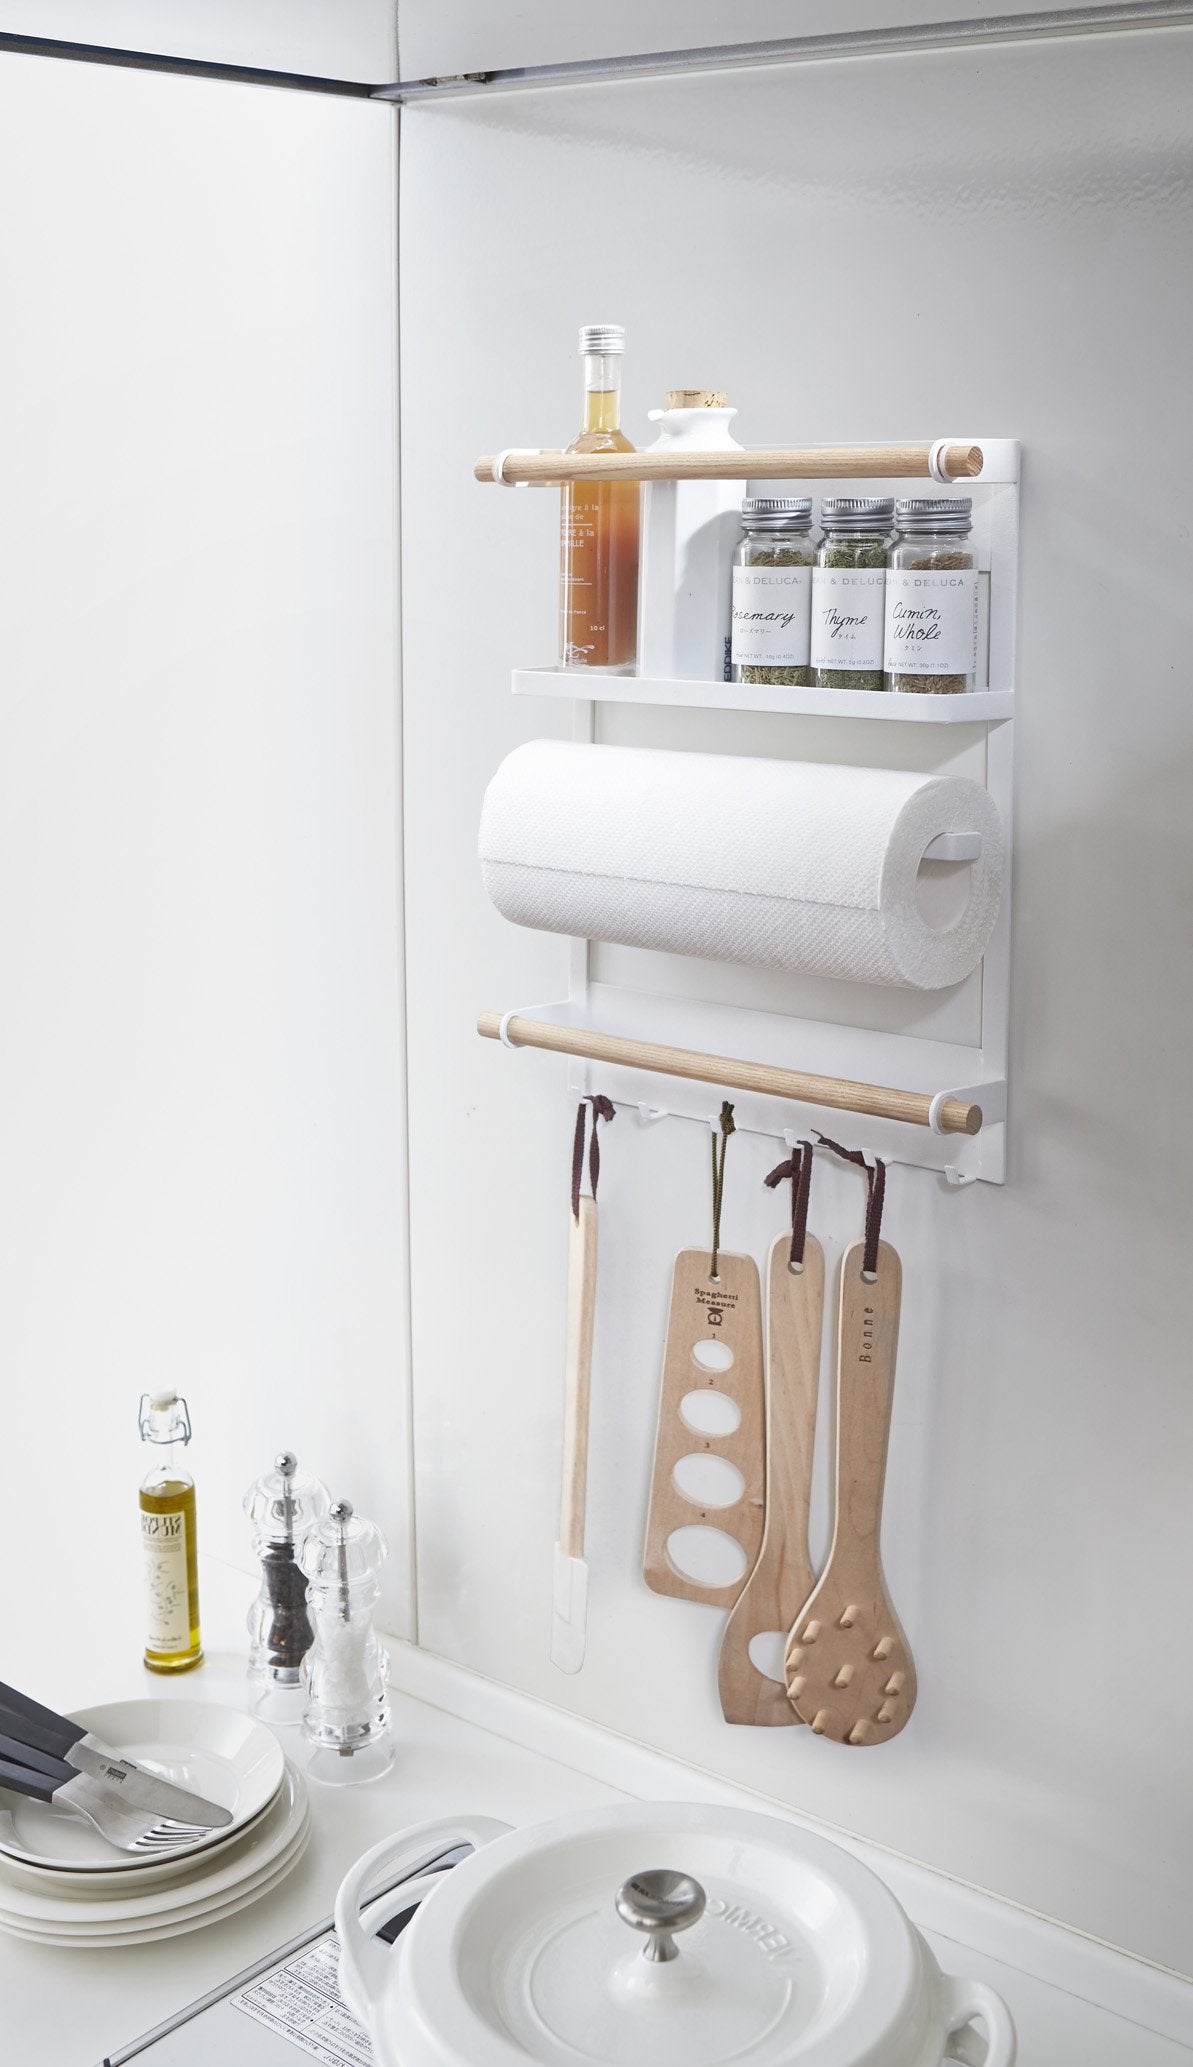 Yamazaki's white magnetic organizing rack holding kitchen and cooking supplies on the fridge